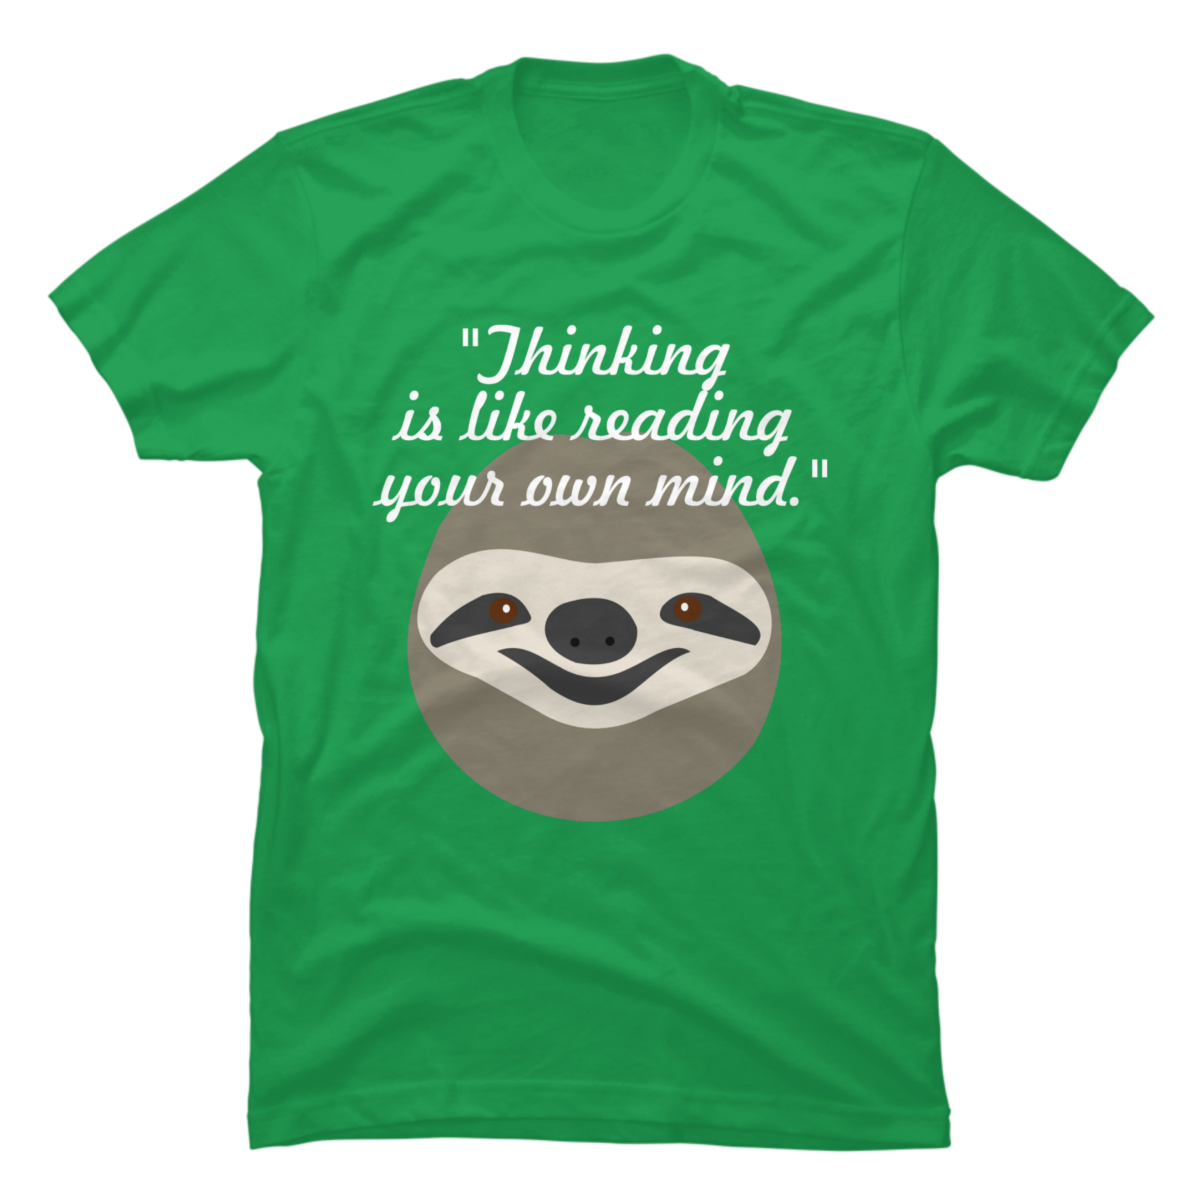 stoner sloth shirt